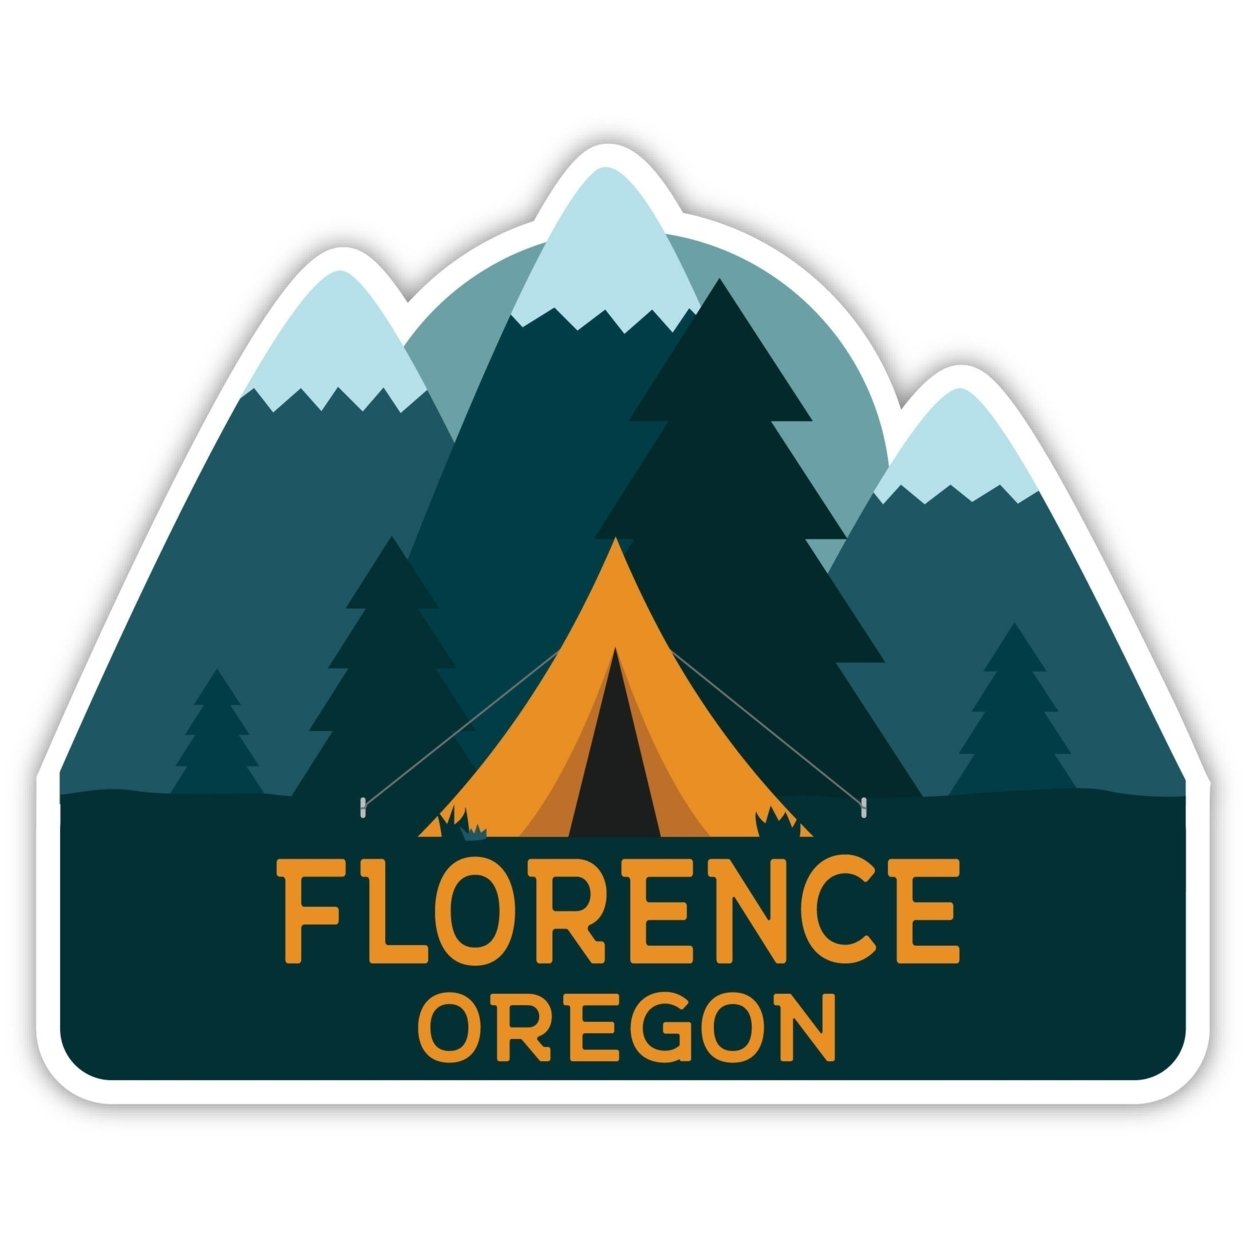 Florence Oregon Souvenir Decorative Stickers (Choose Theme And Size) - Single Unit, 4-Inch, Camp Life